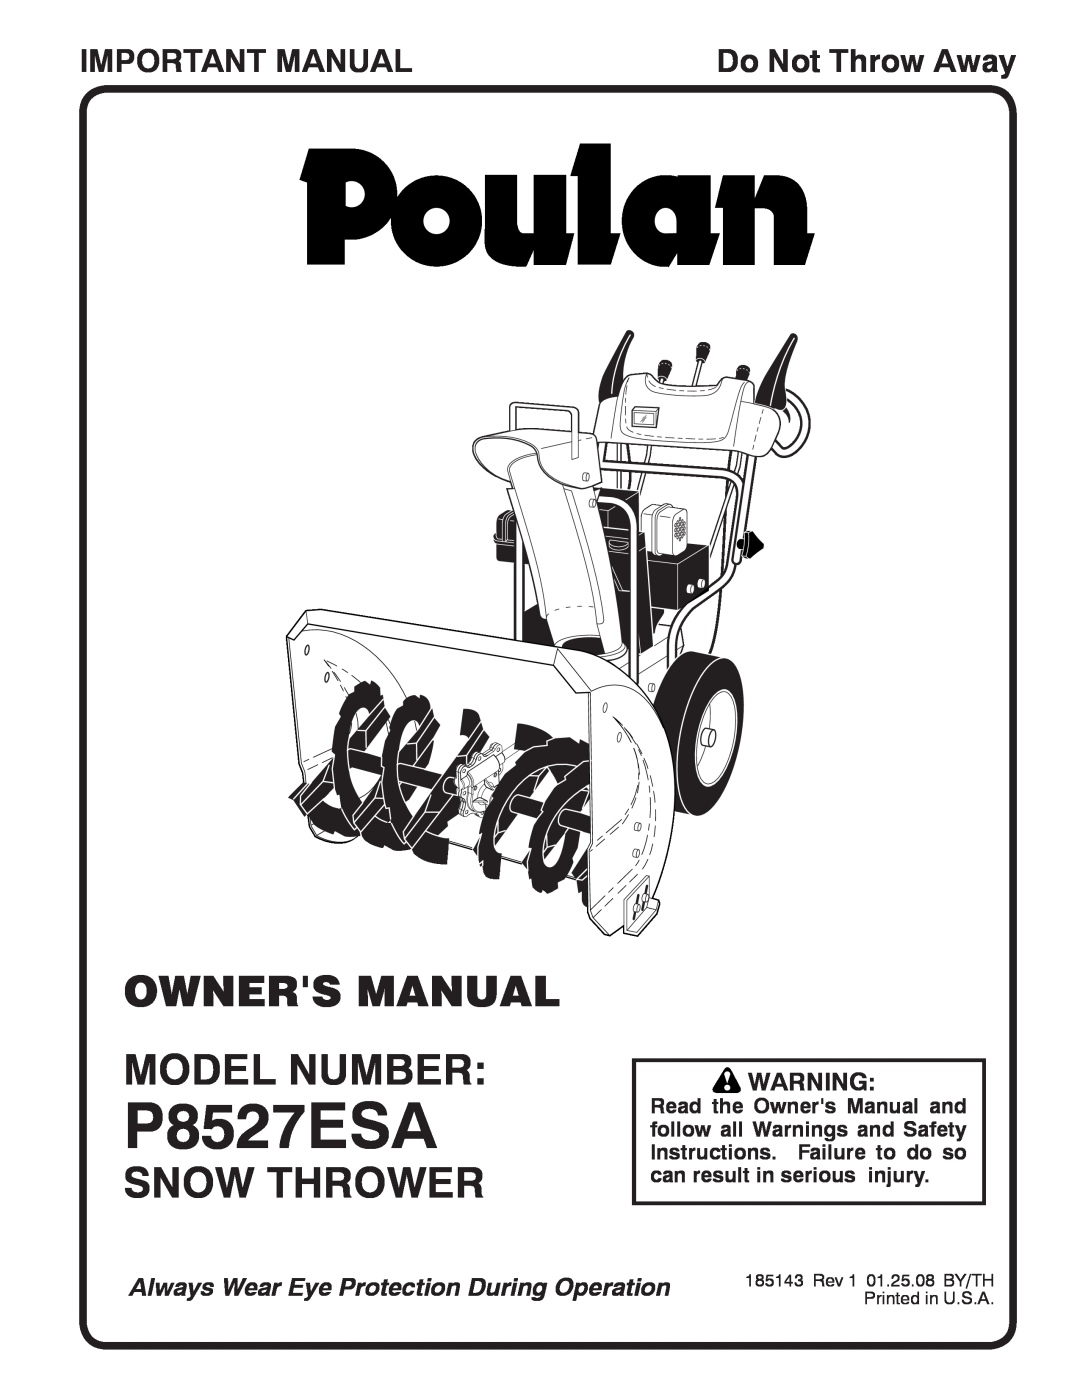 Poulan 185143 owner manual Snow Thrower, Important Manual, P8527ESA, Do Not Throw Away 